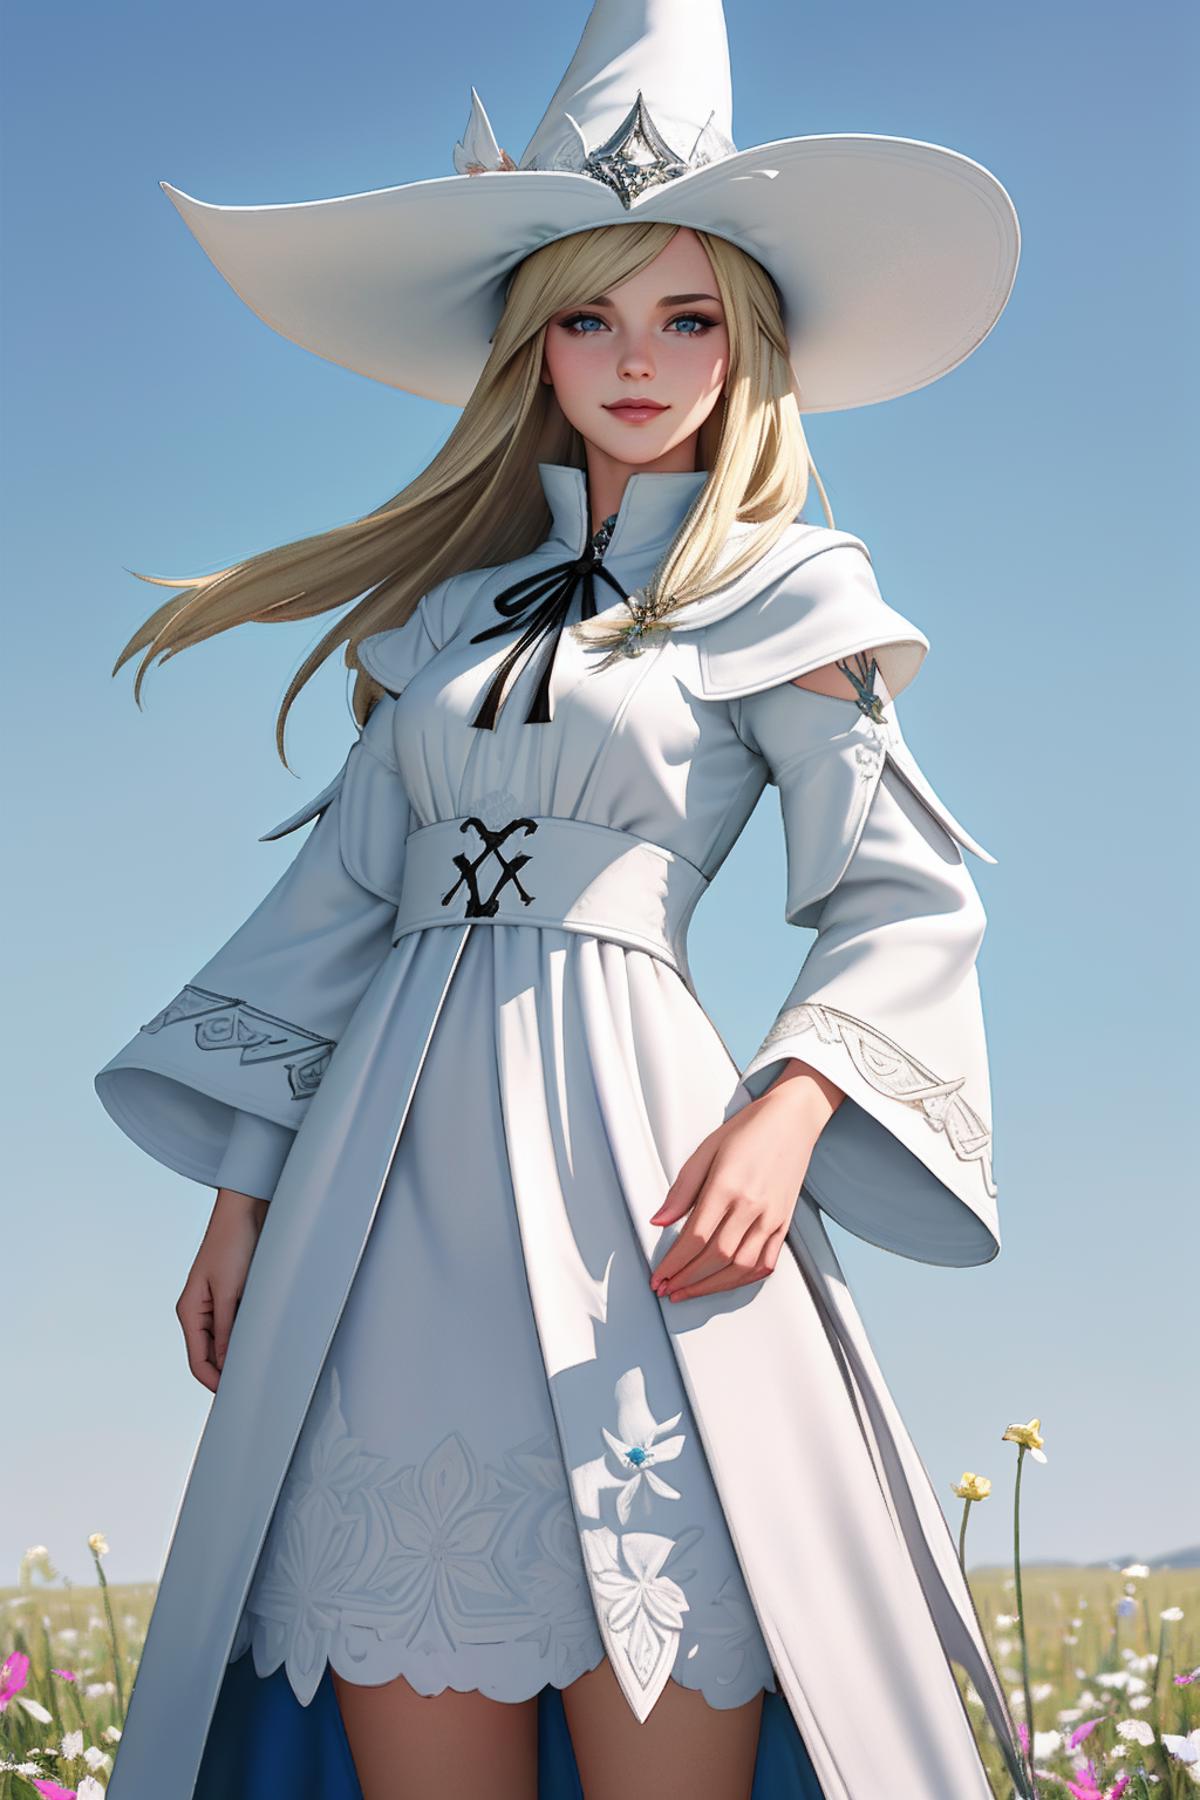 White Mage Fashion image by EDG